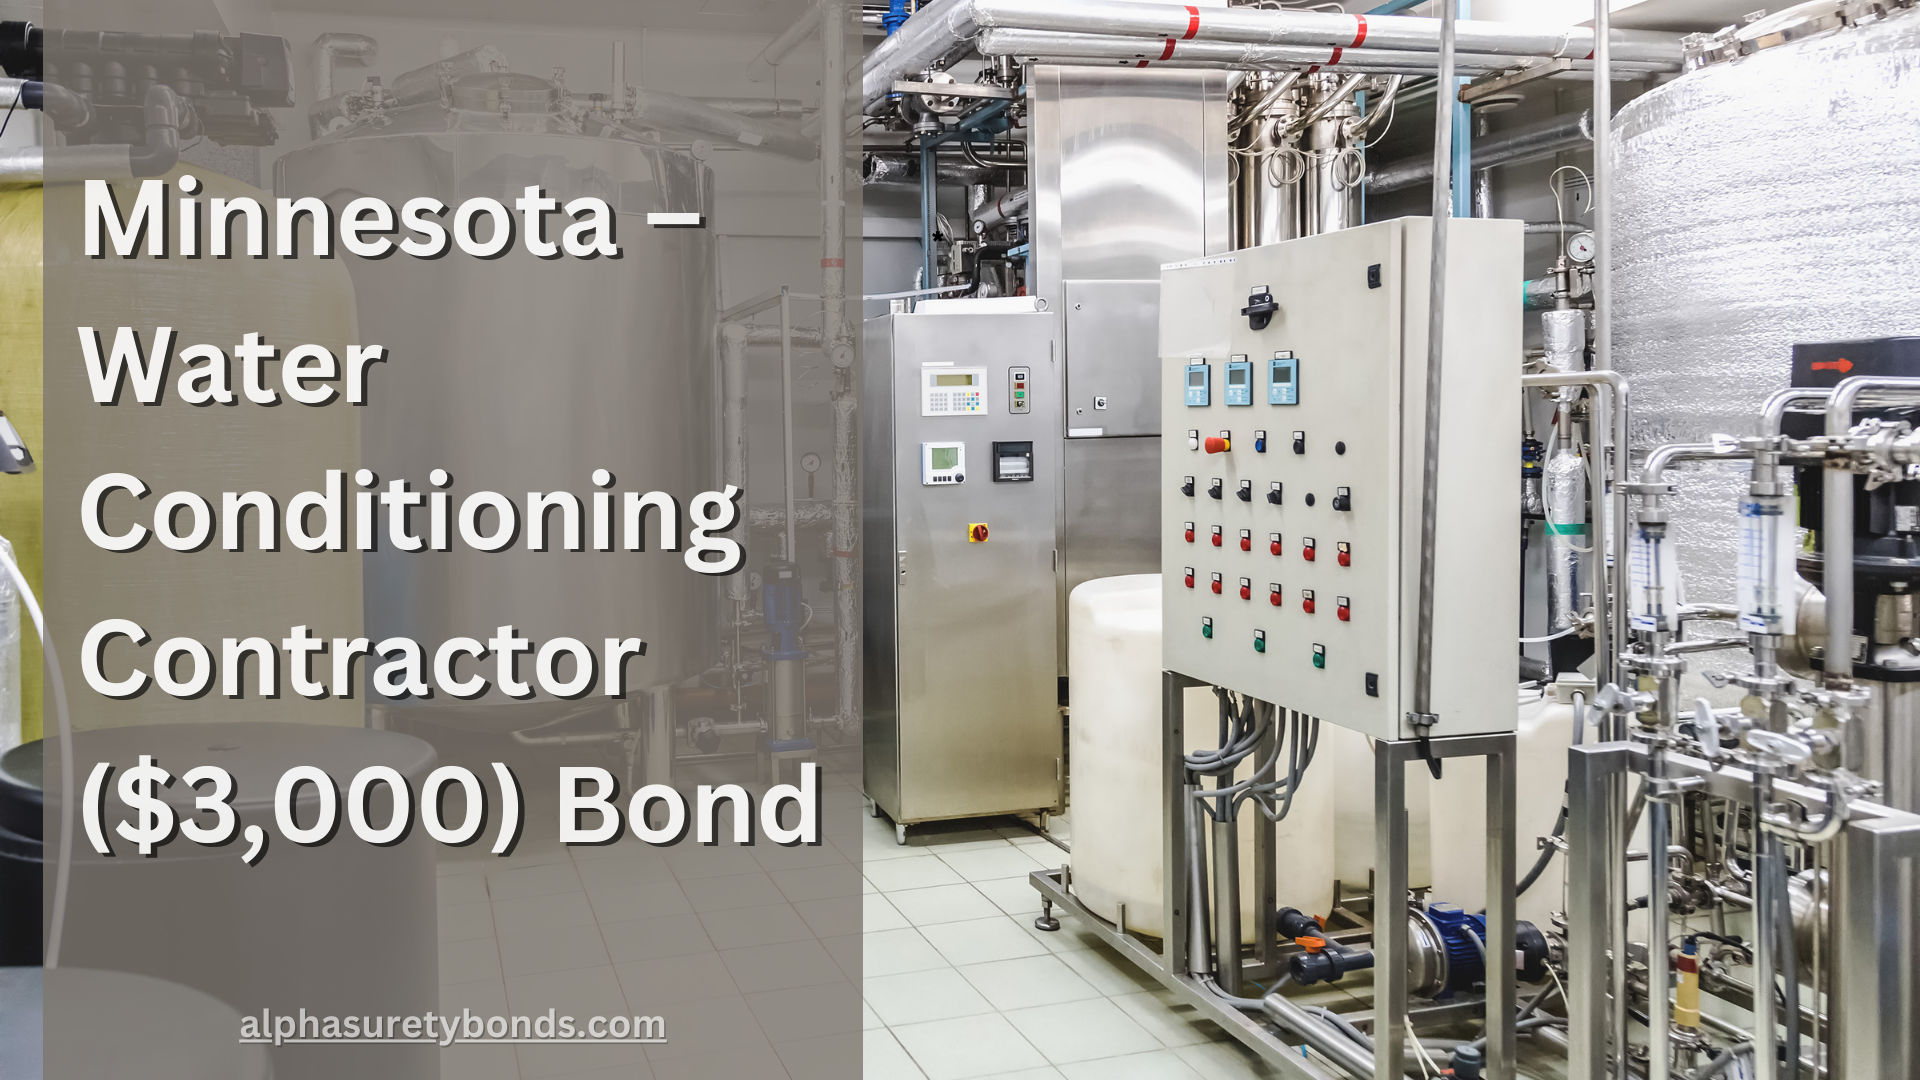 Minnesota – Water Conditioning Contractor ($3,000) Bond